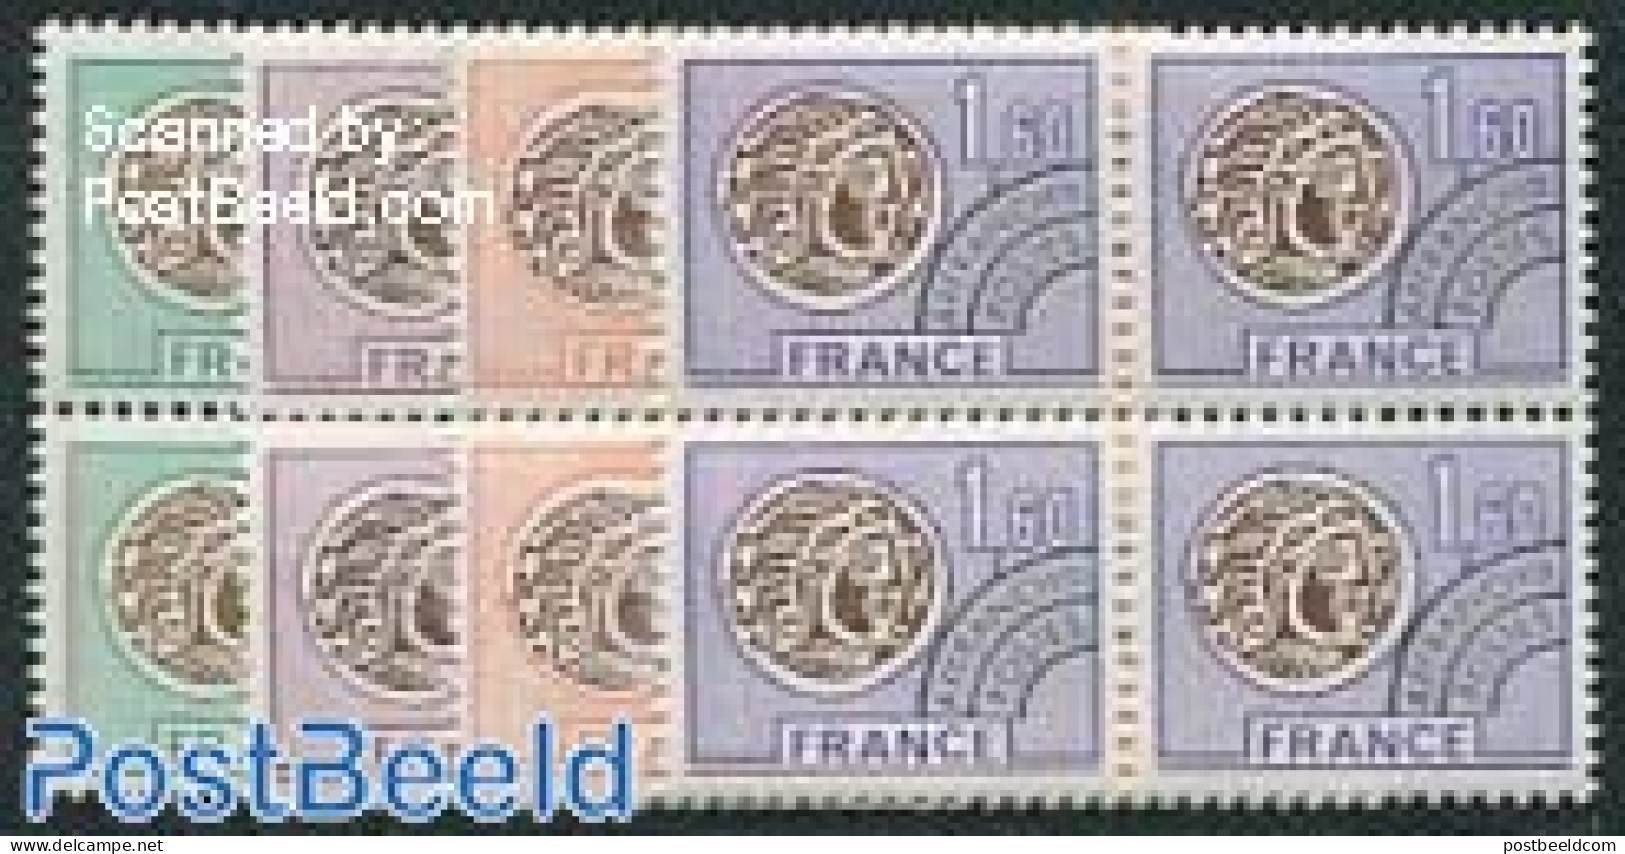 France 1976 Precancels 4v, Blocks Of 4 [+], Mint NH - Ungebraucht